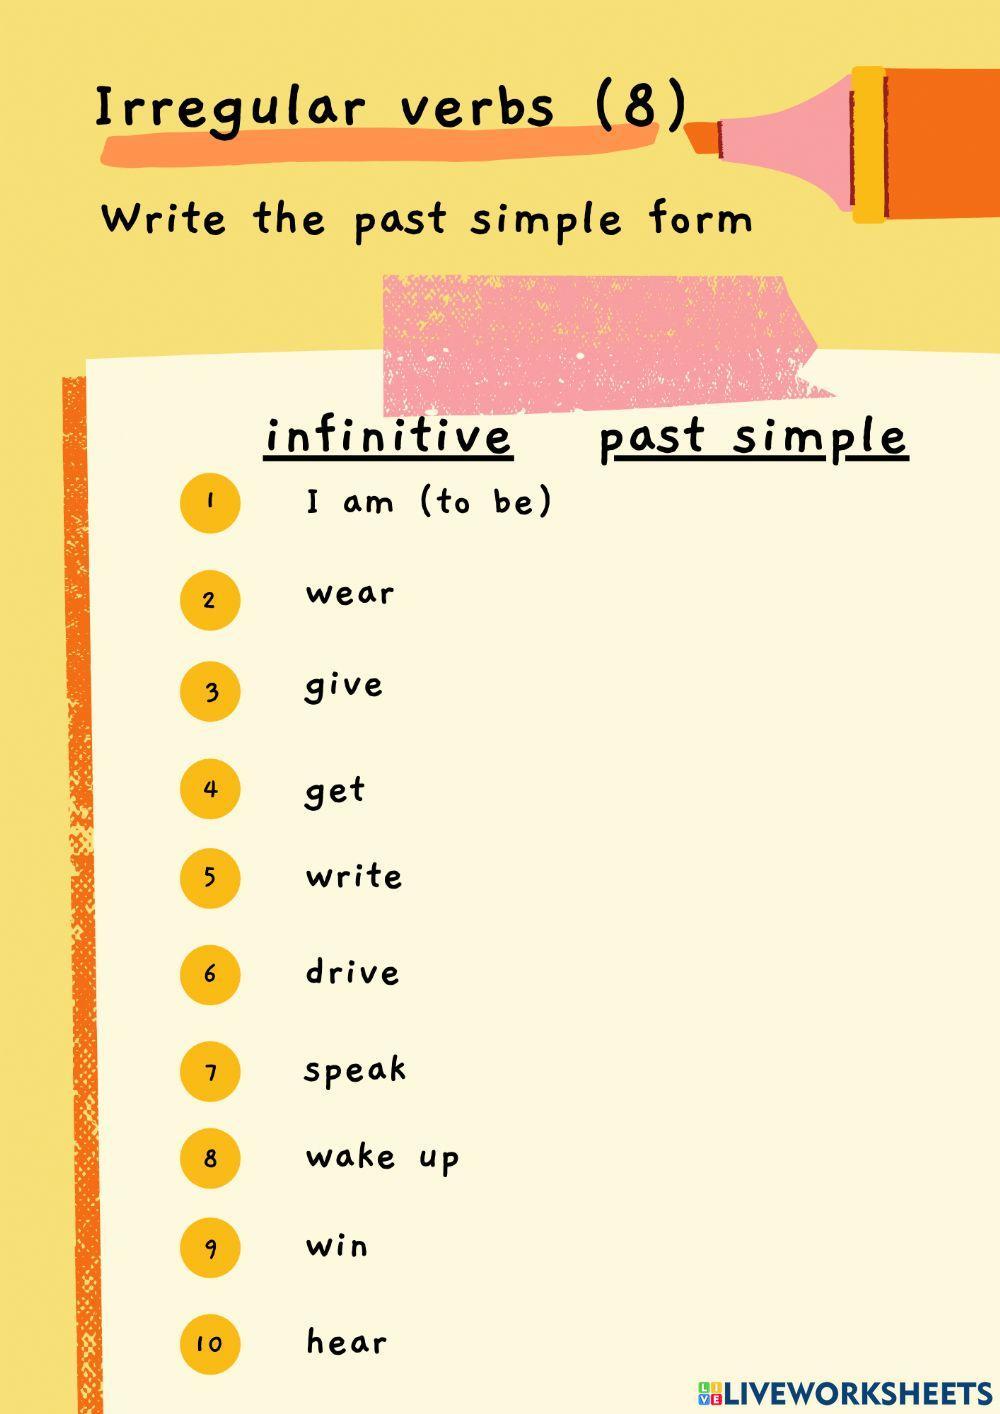 Irregular Verb Past Simple Test (8)